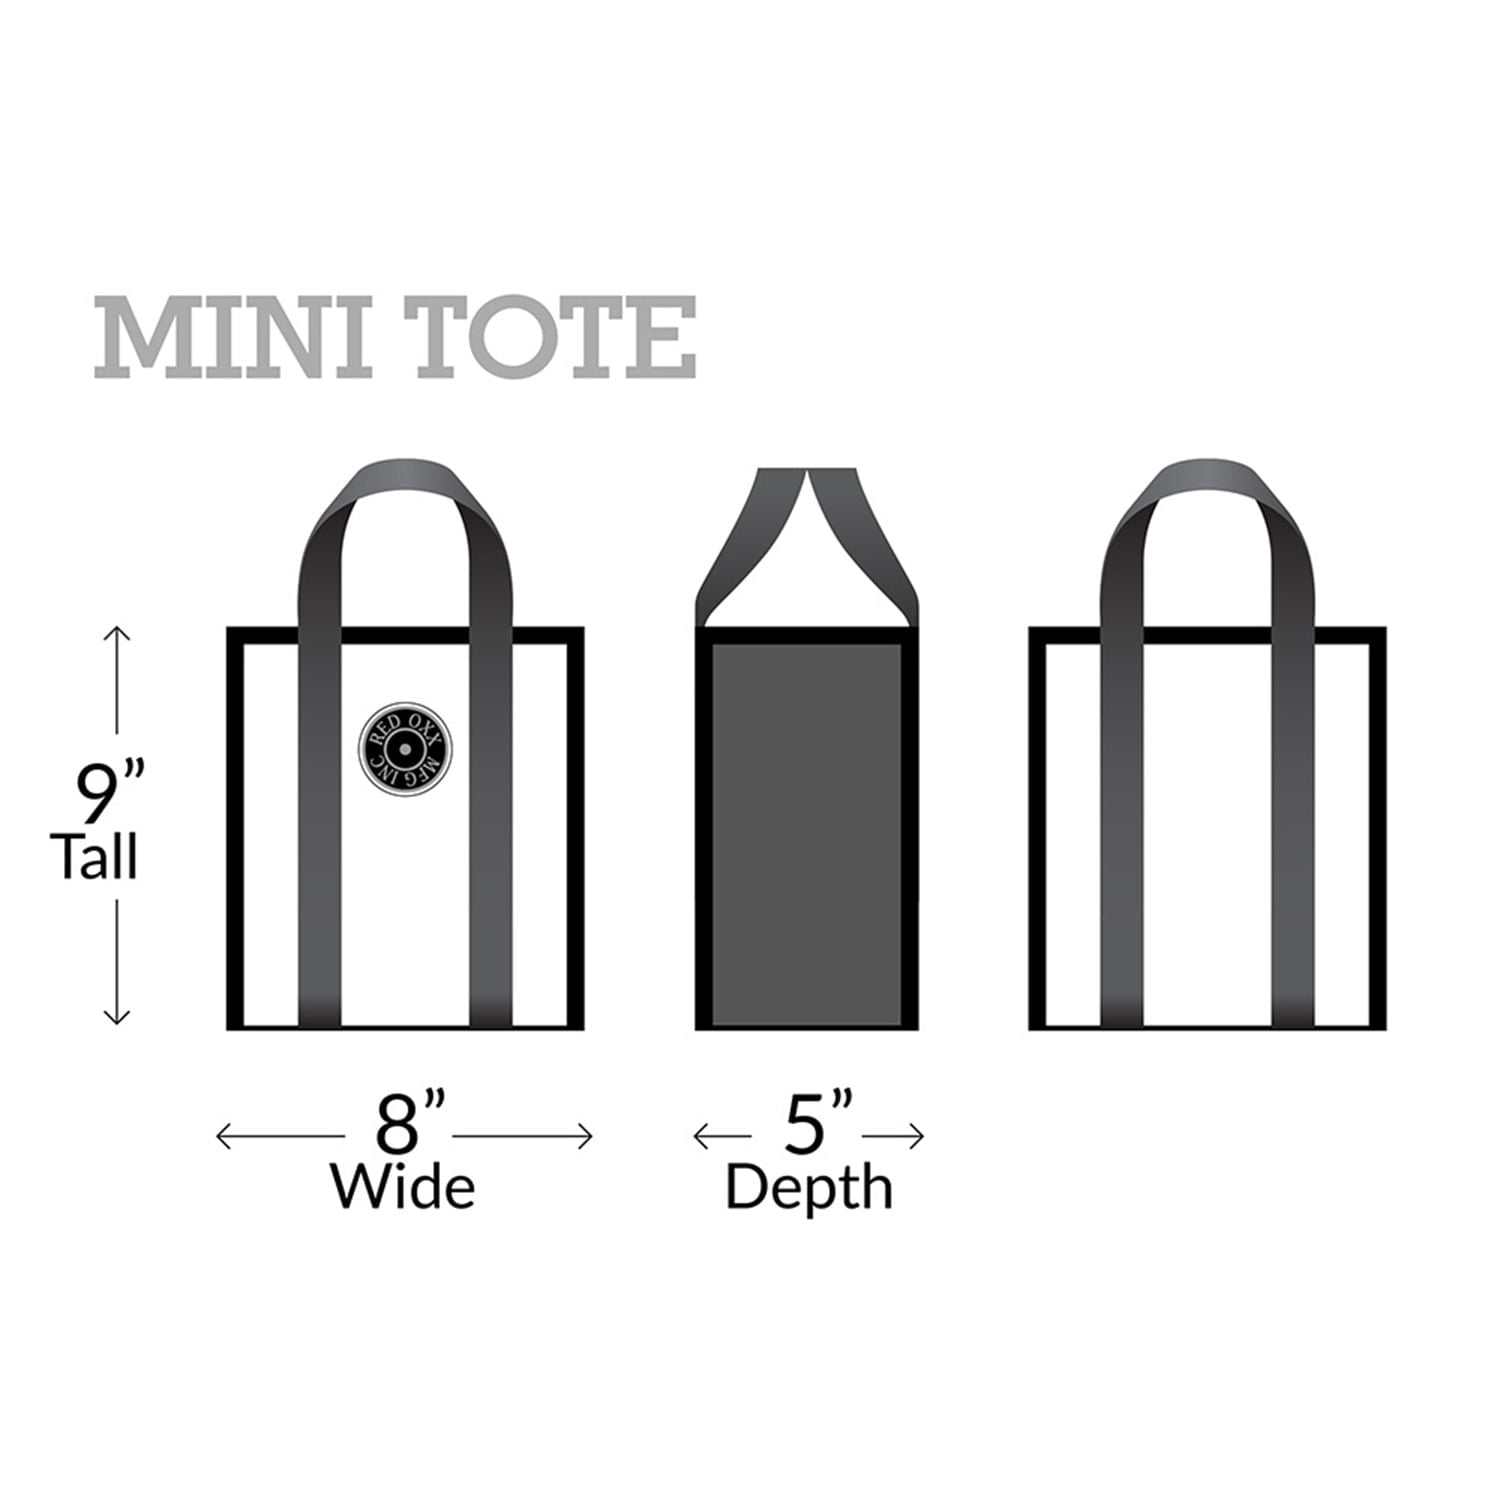 Mini Tote Measurements 9 inches Tall x 8 inches Wide x 5 inches Depth.